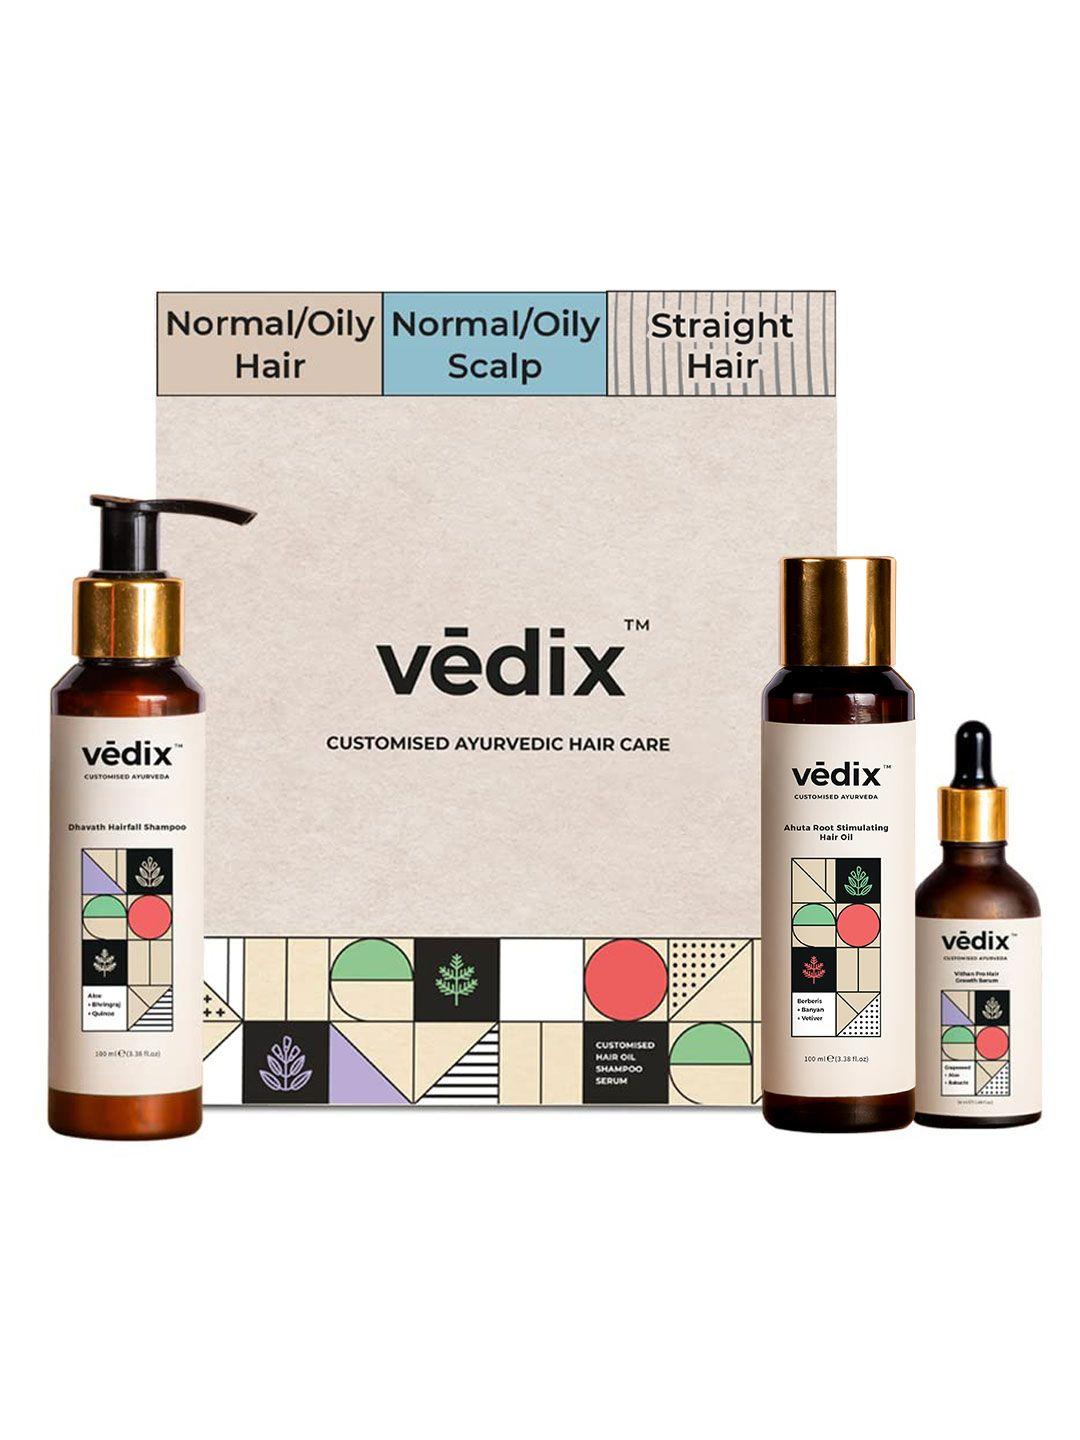 vedix customized hair fall control normal/oily hair:normal oily scalp+straight hair